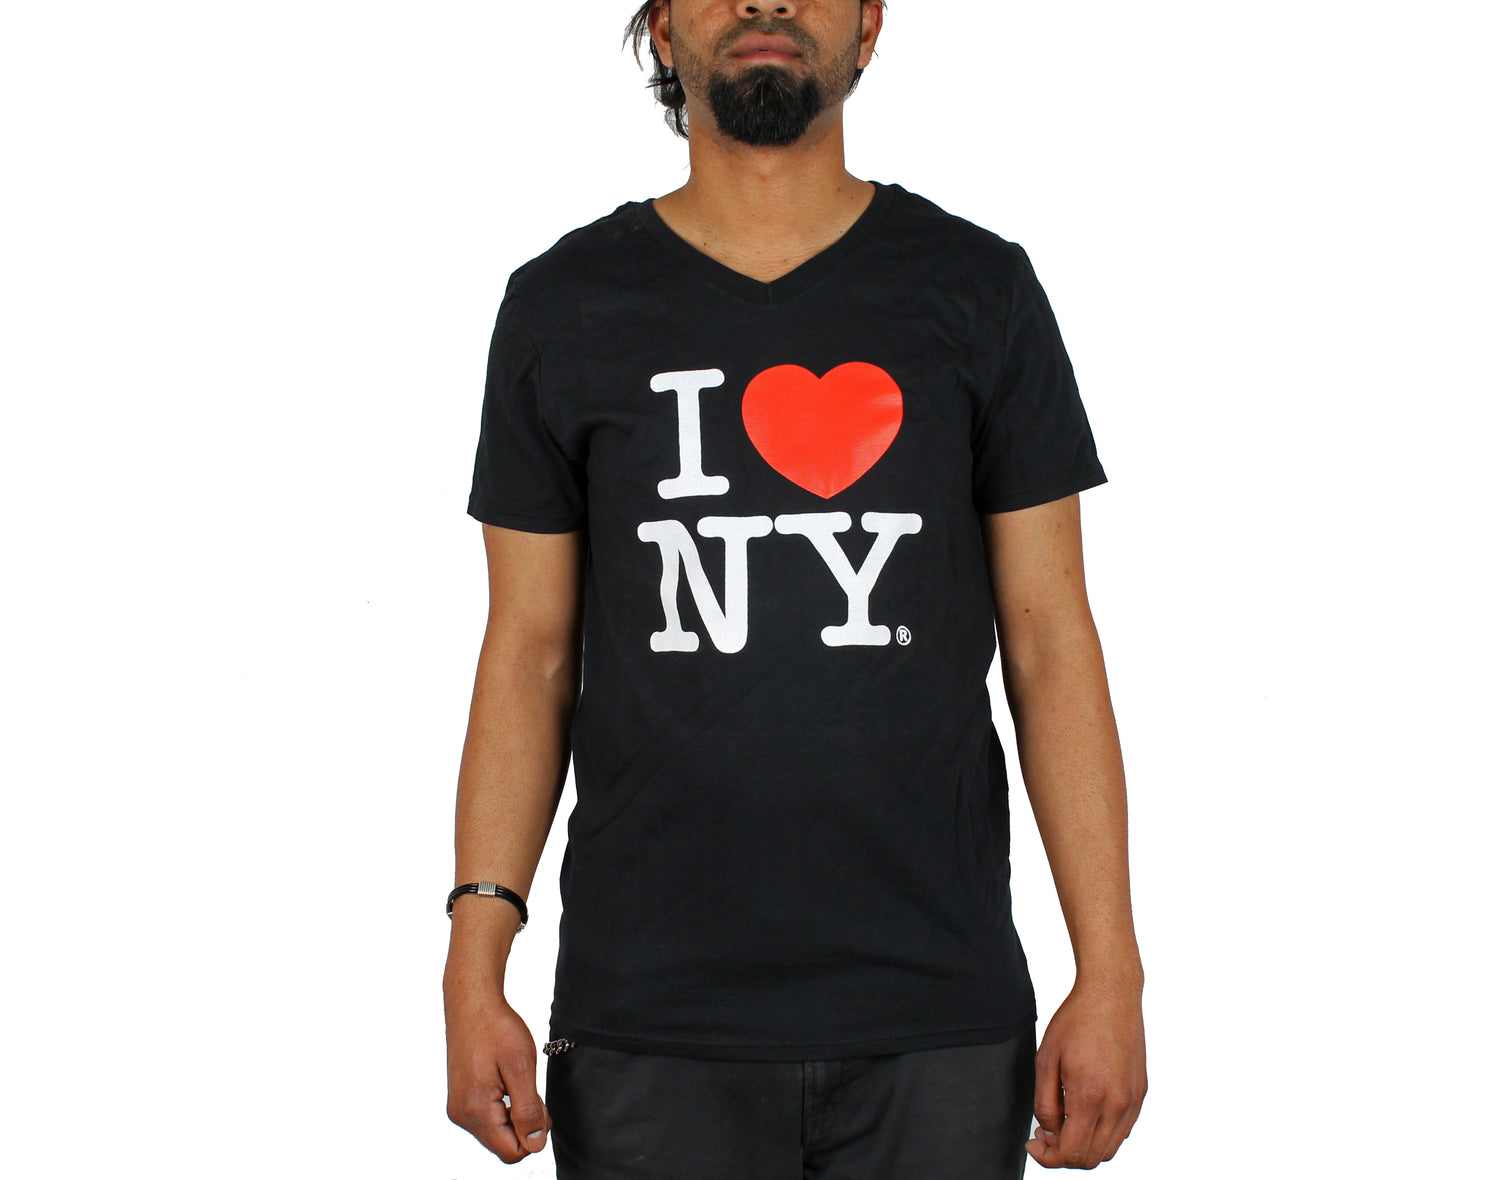 I Love NY Unisex Adult V-Neck T-Shirt